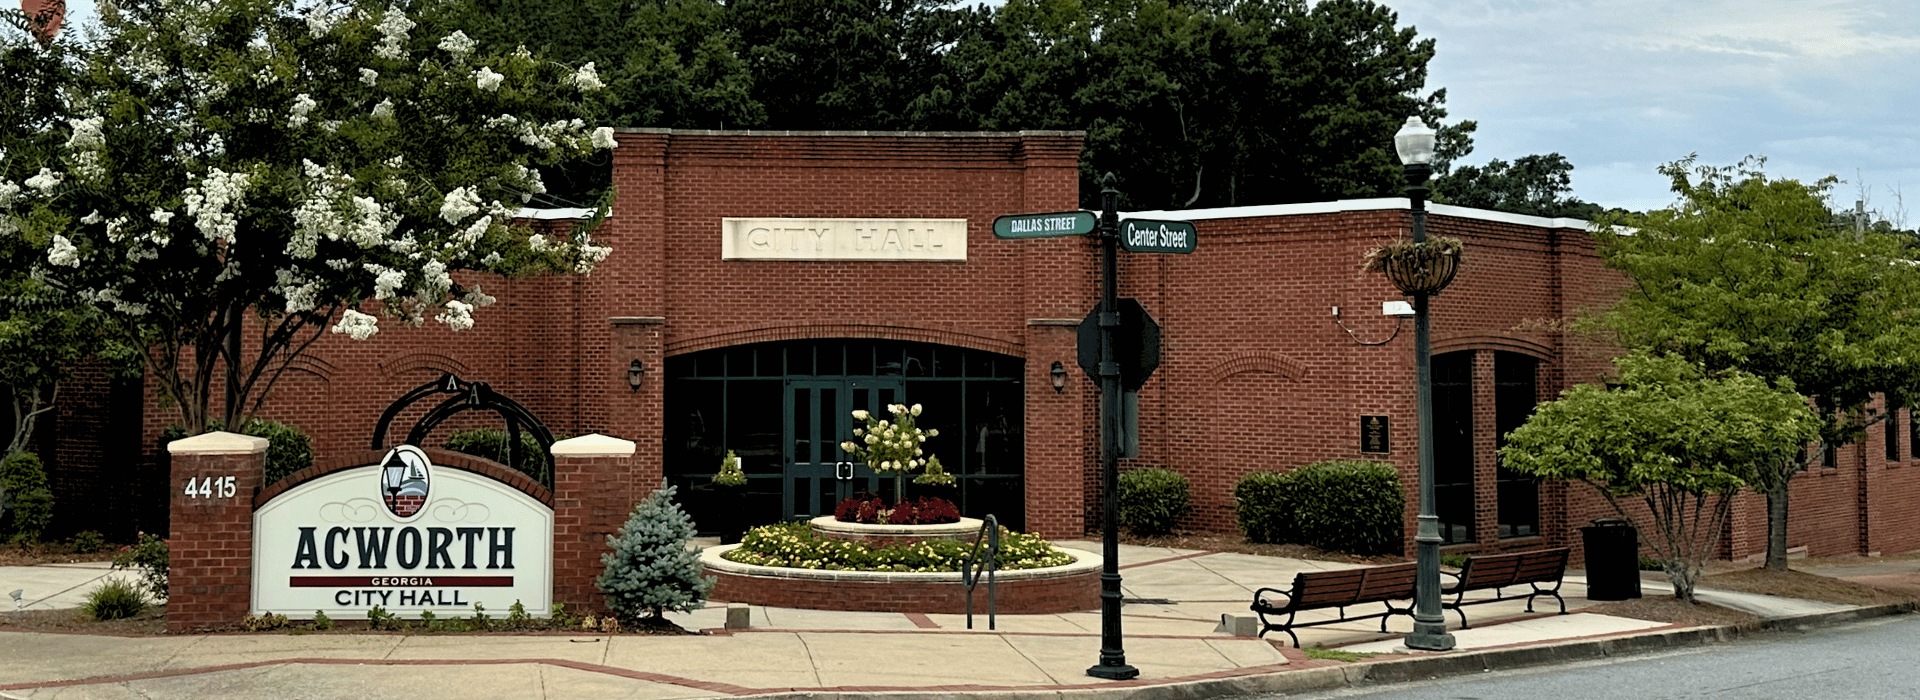 Image Acworth City Hall